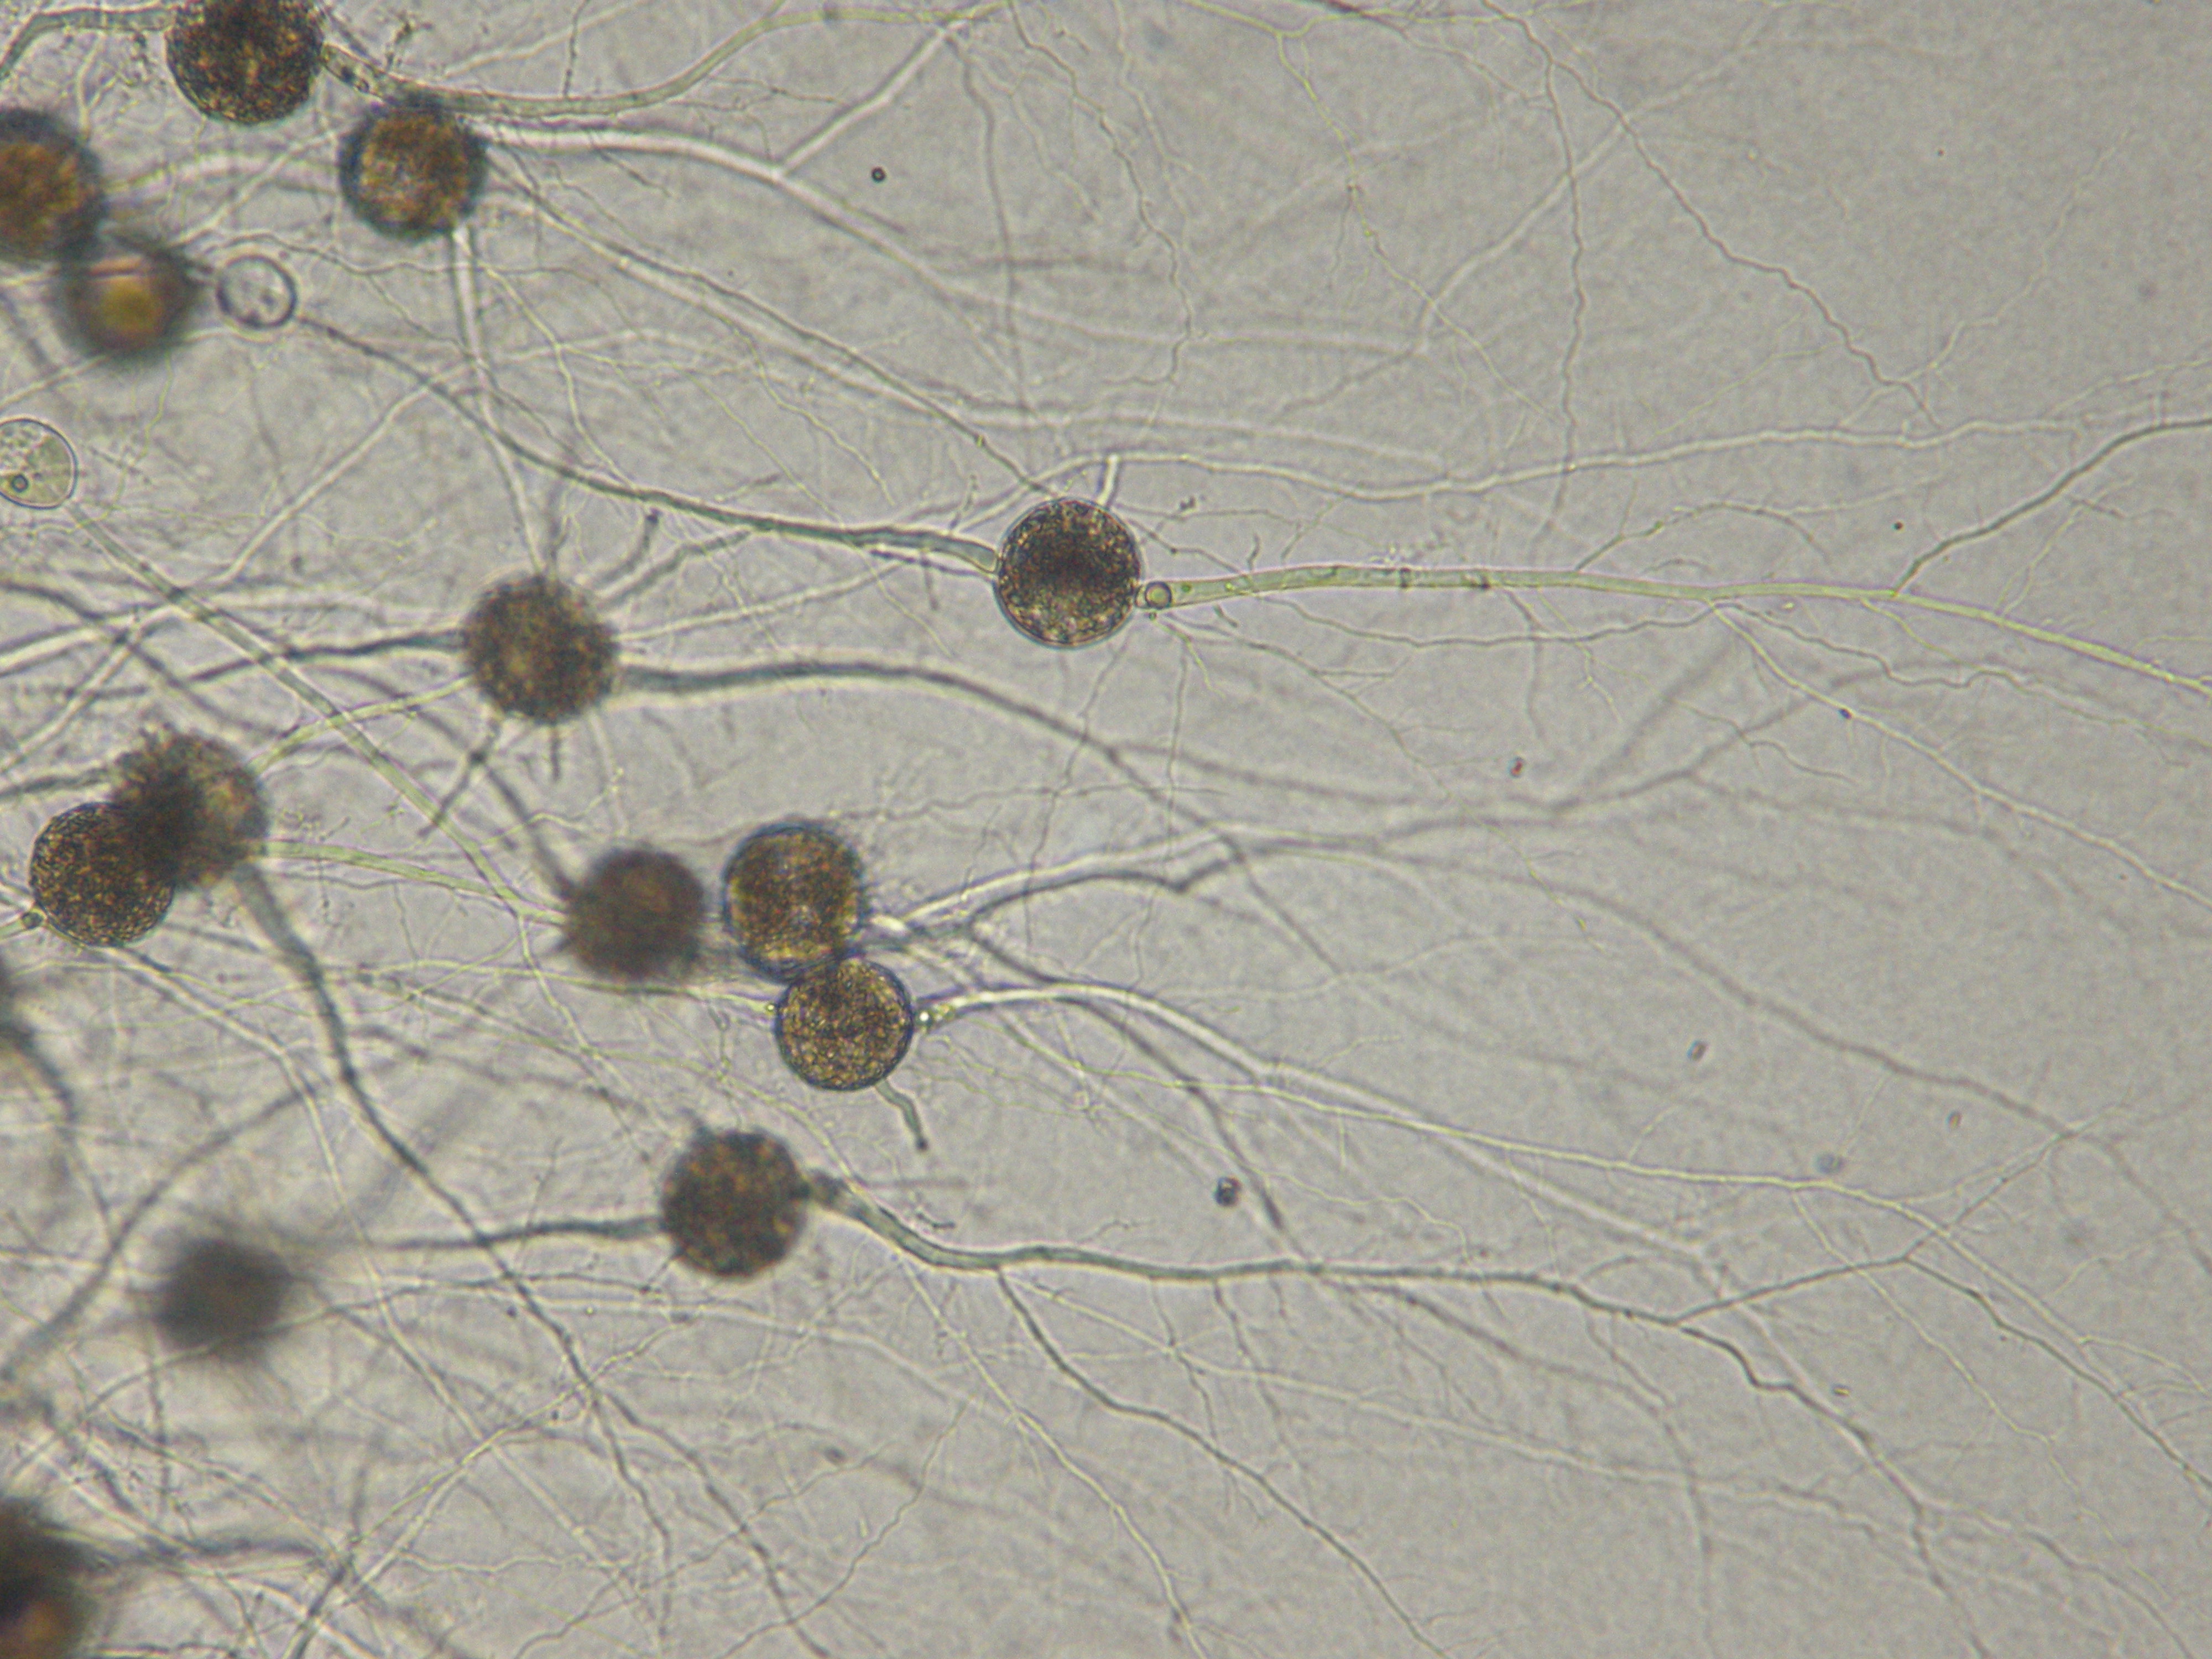 Zoosporangia and thalli of Cladochytrium polystomum (WB228). Photo by Martha Powell.